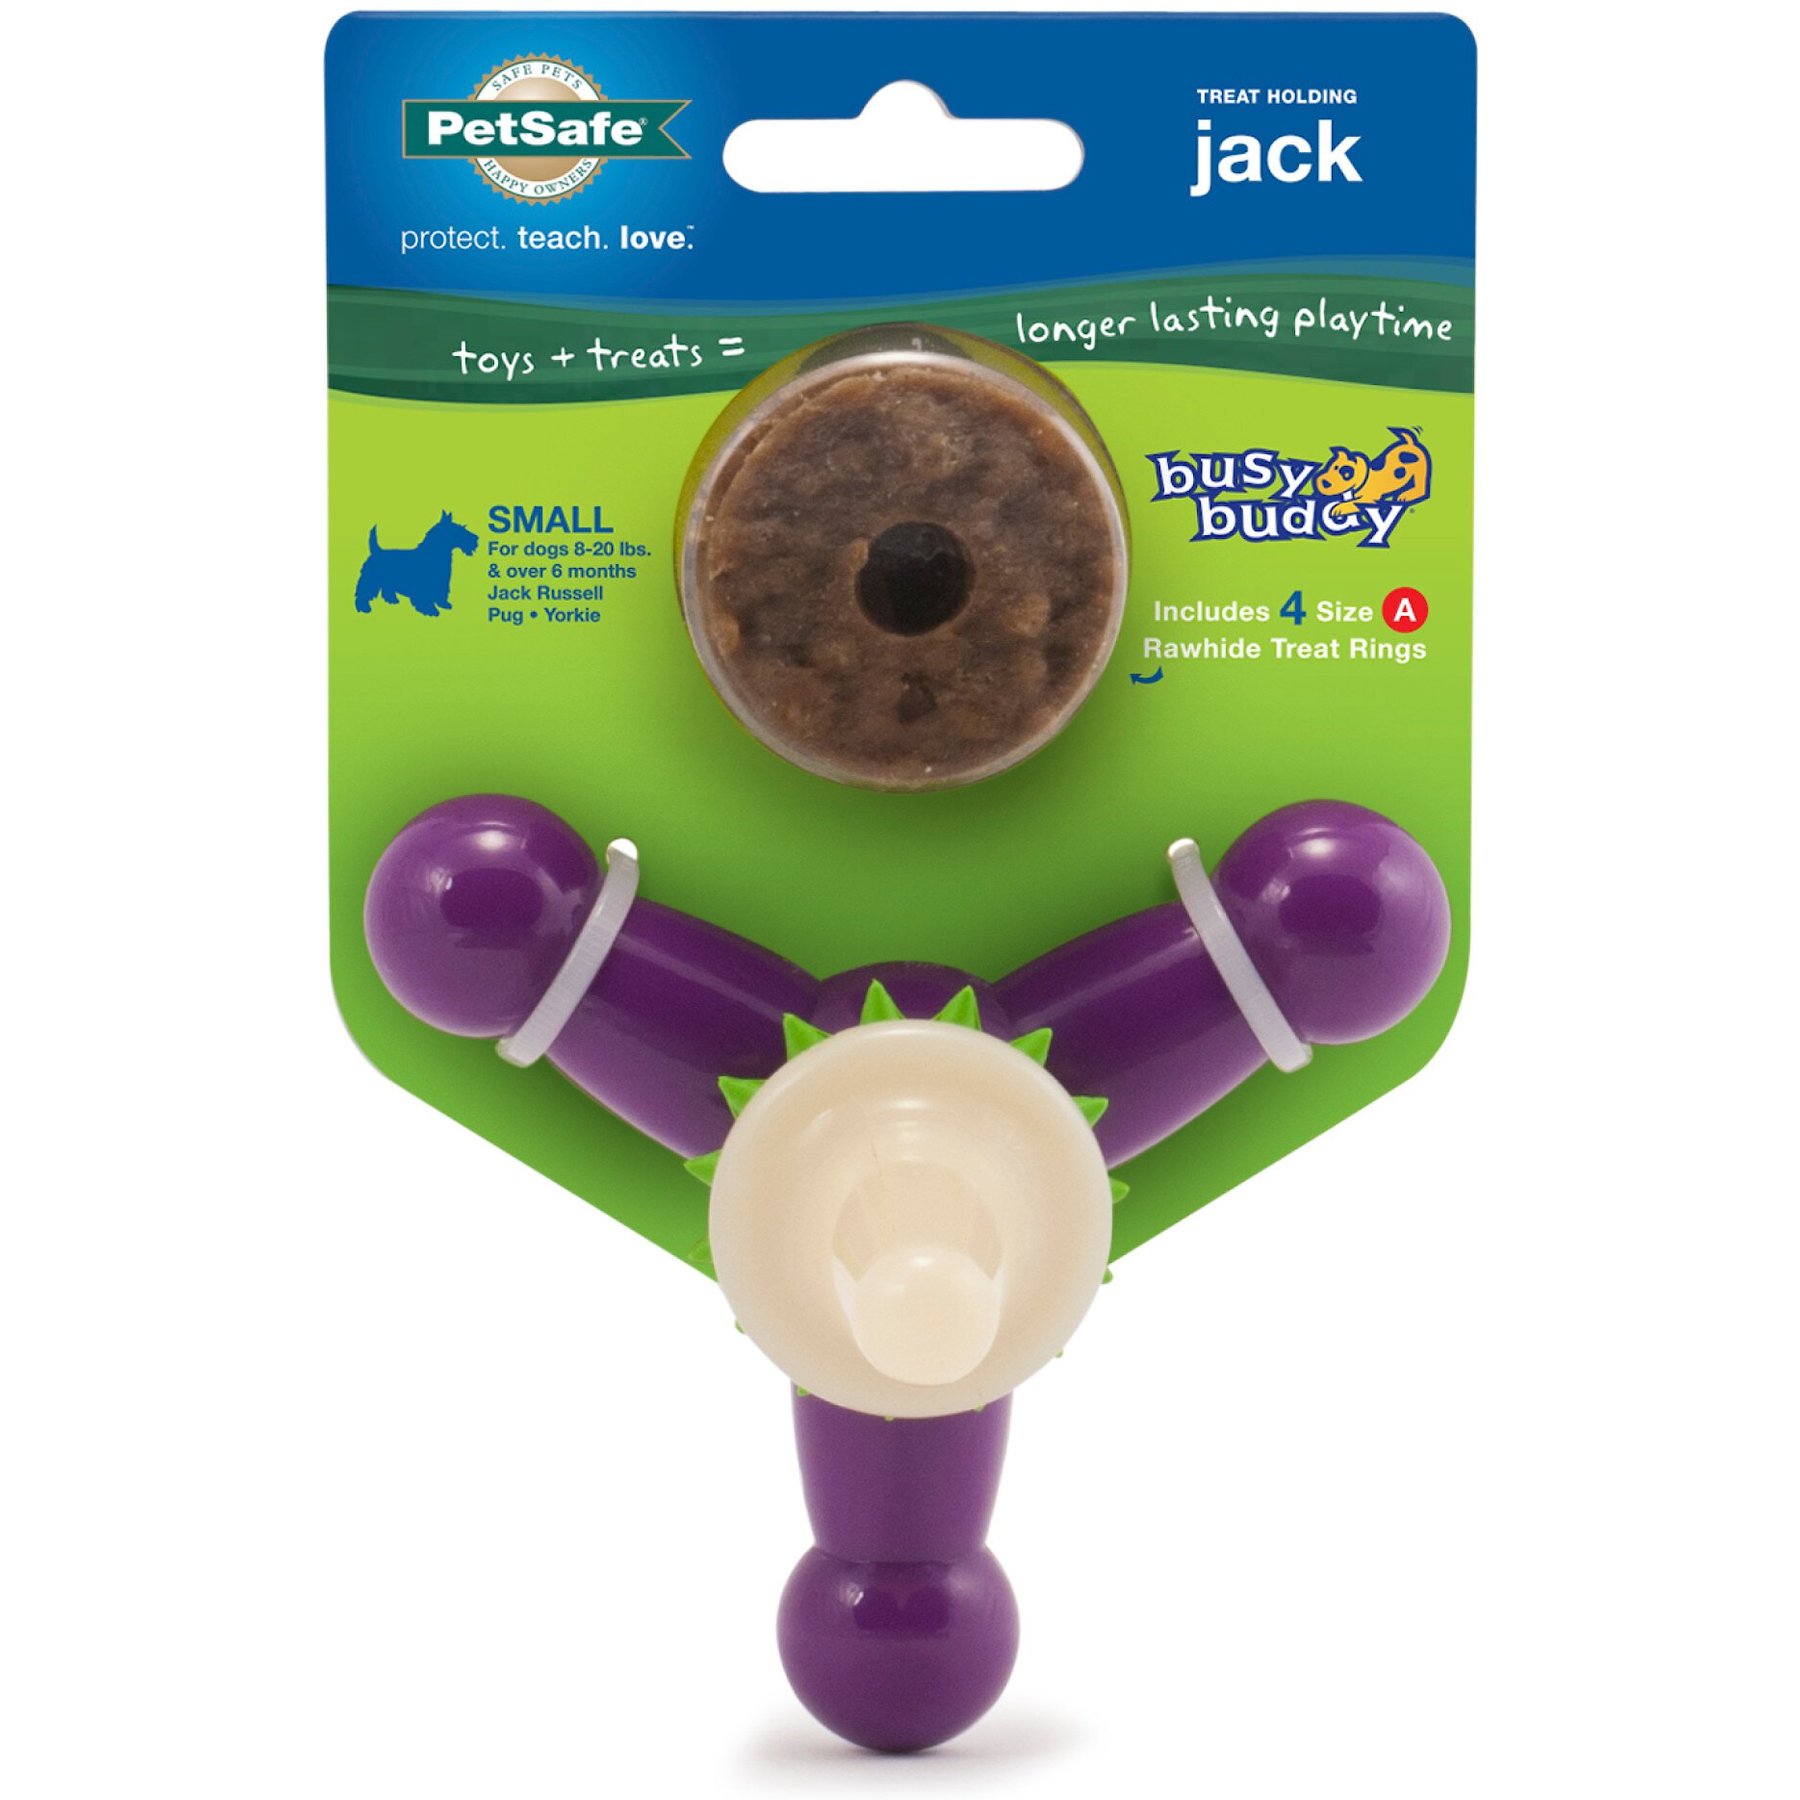 Petkin Fruit Dog Chew Toy - Entertaining, Safe & Non-Toxic Play